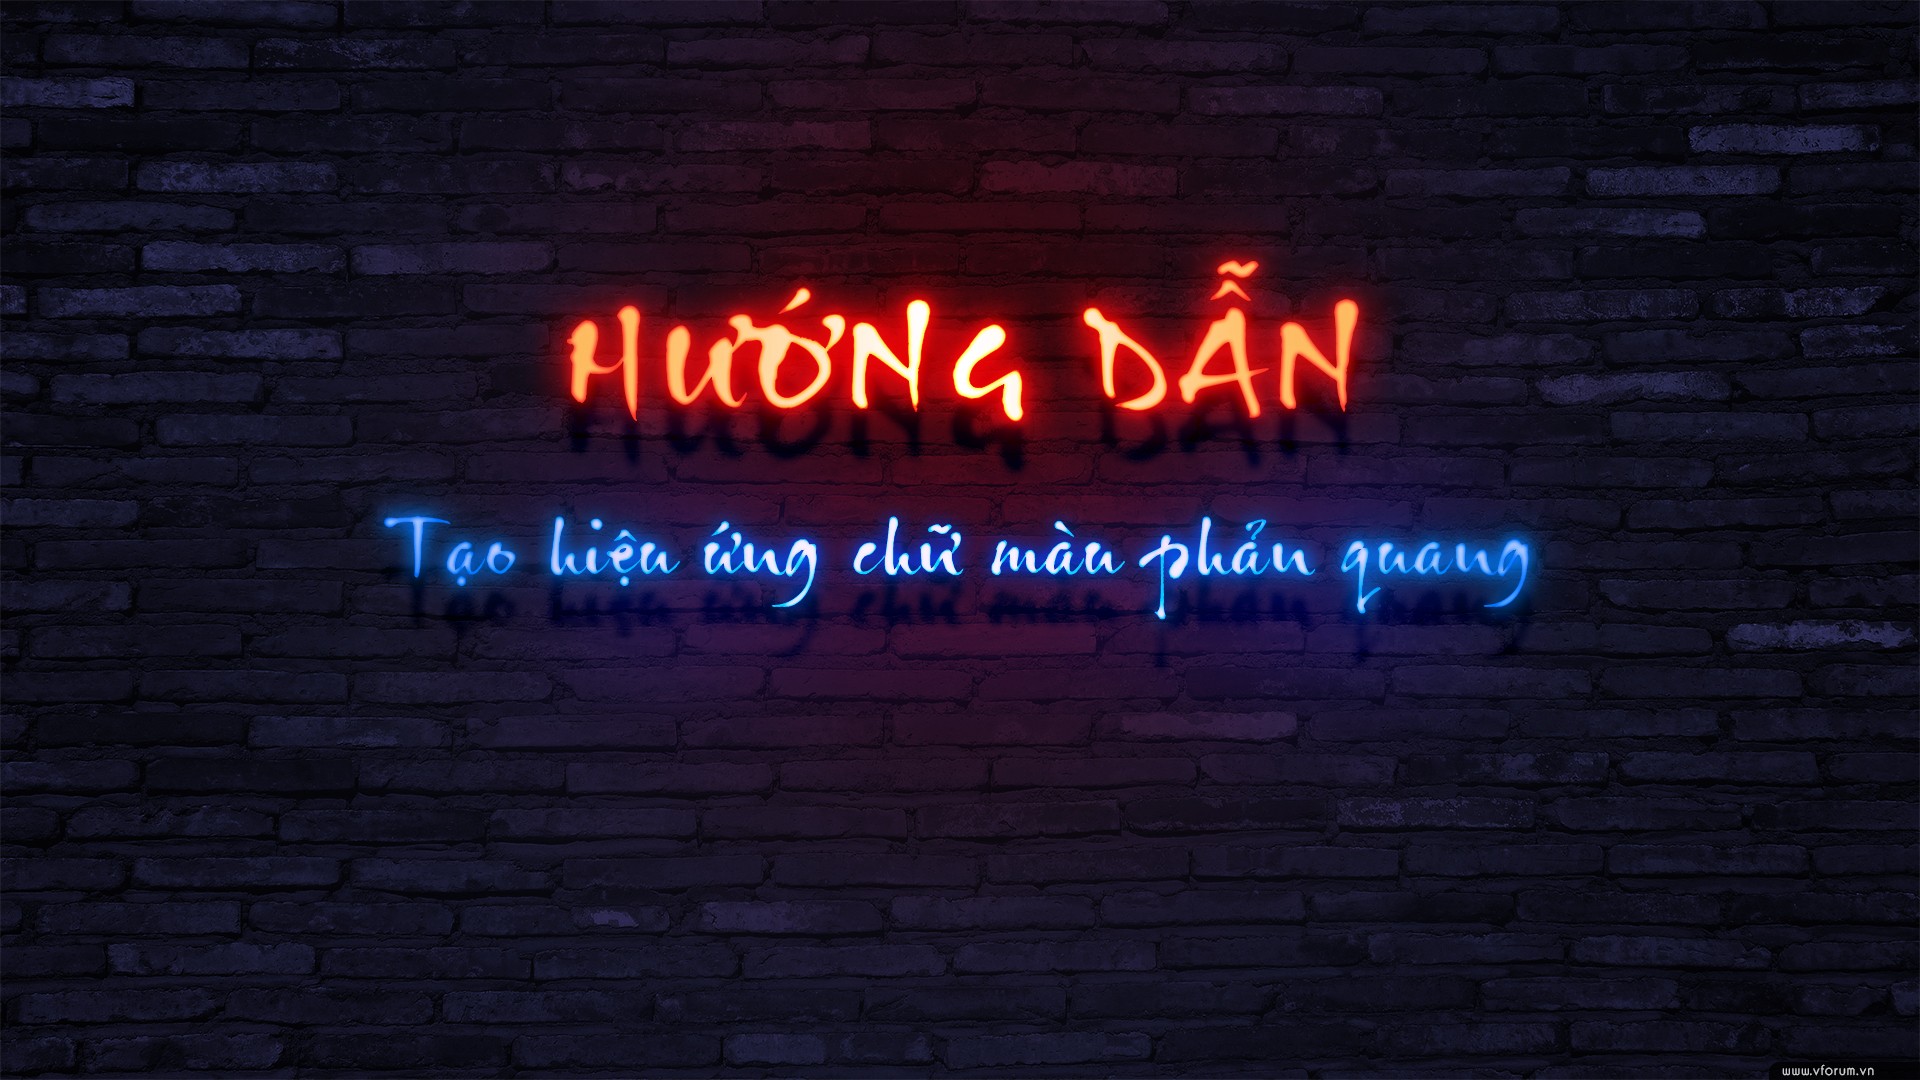 tao-hieu-ung-chu-phan-quang-neon-photoshop-1.jpg